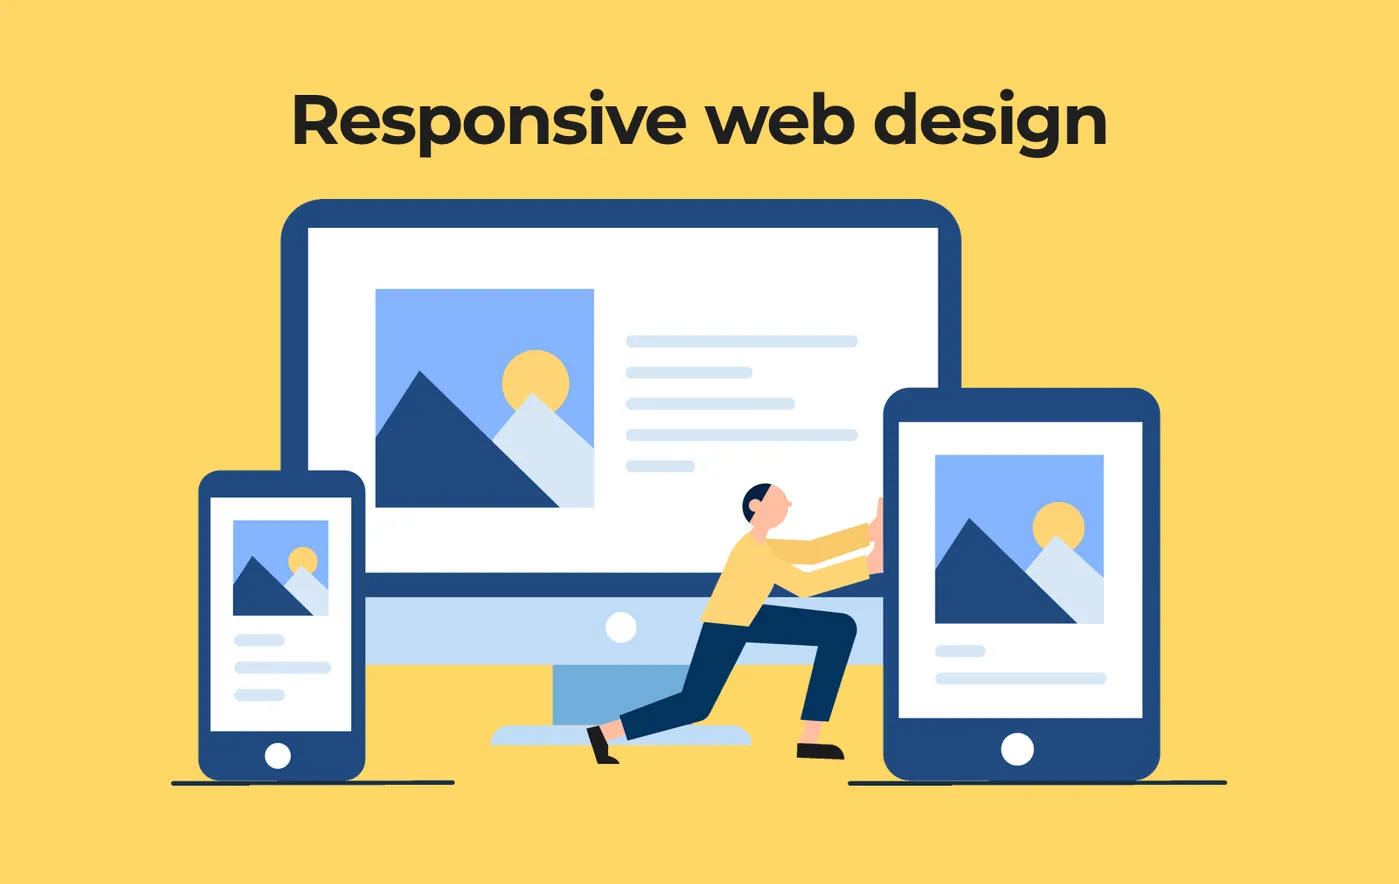 How responsive web design works